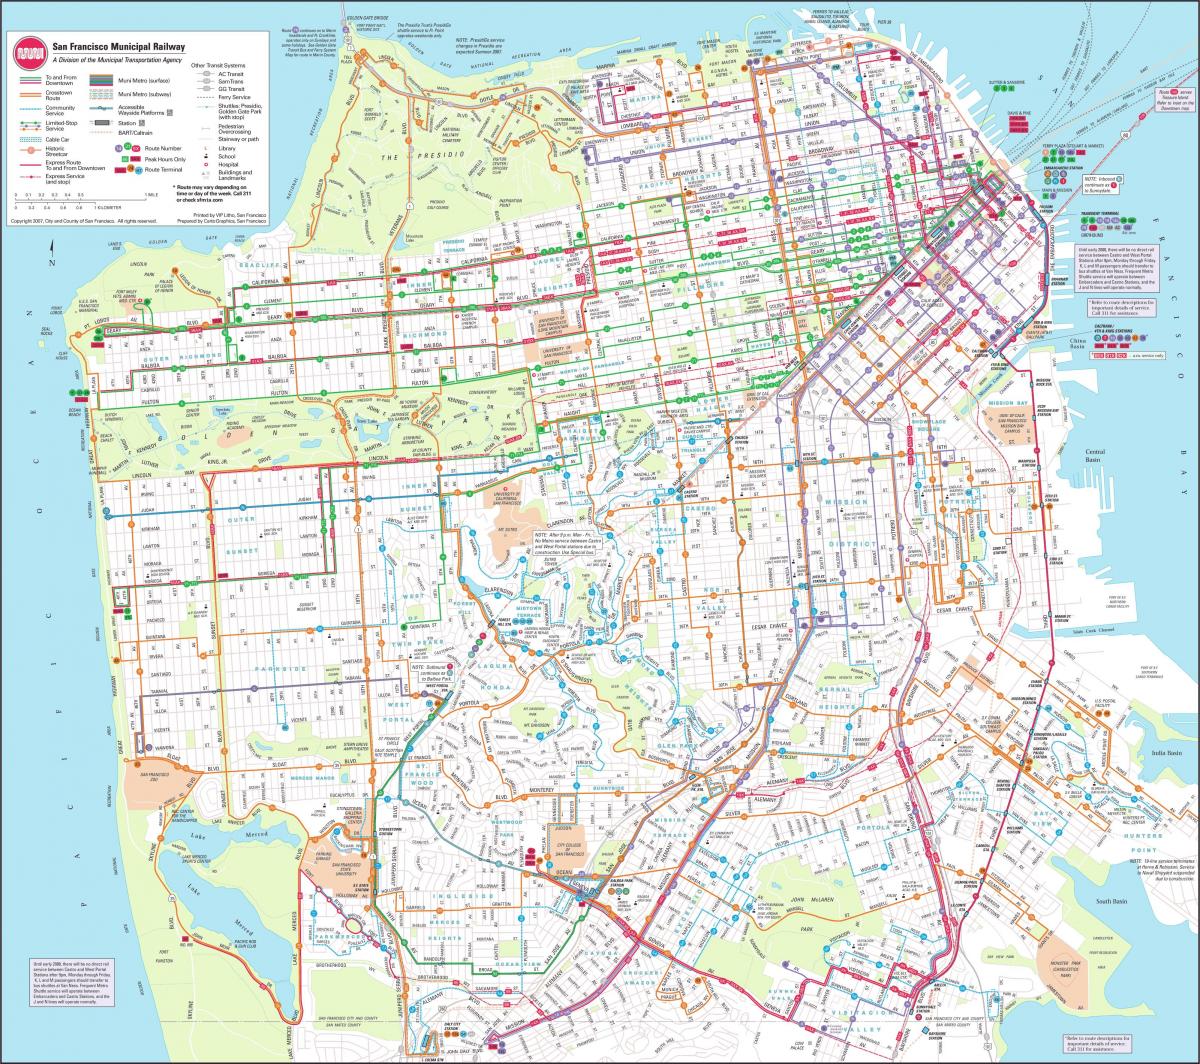 Mapu San Francisco obecnej železničnej